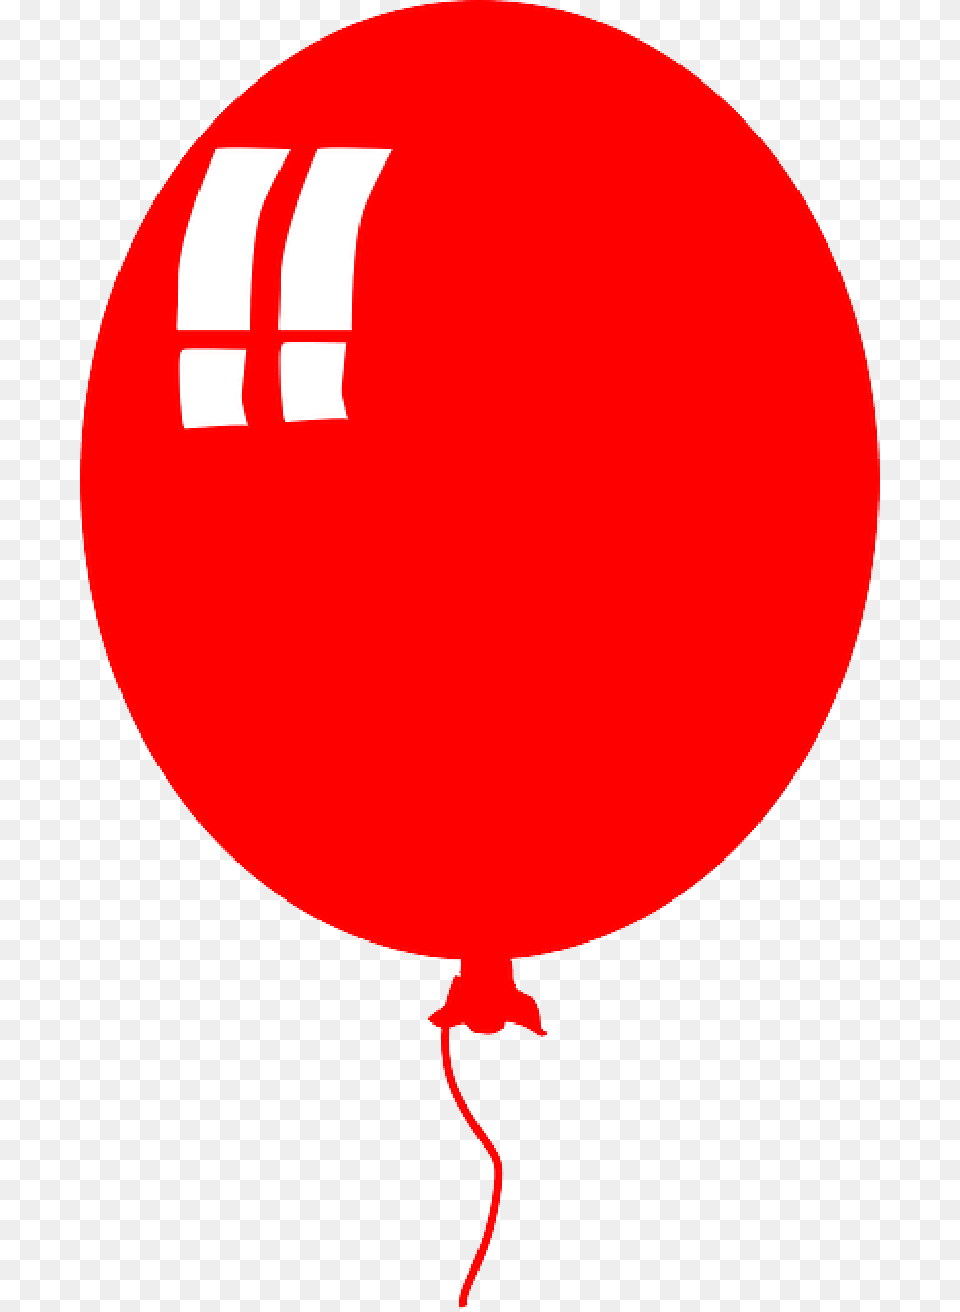 Red Kids Recreation Cartoon Party Balloon Helium Balloon Clip Art, Clothing, Hardhat, Helmet Free Png